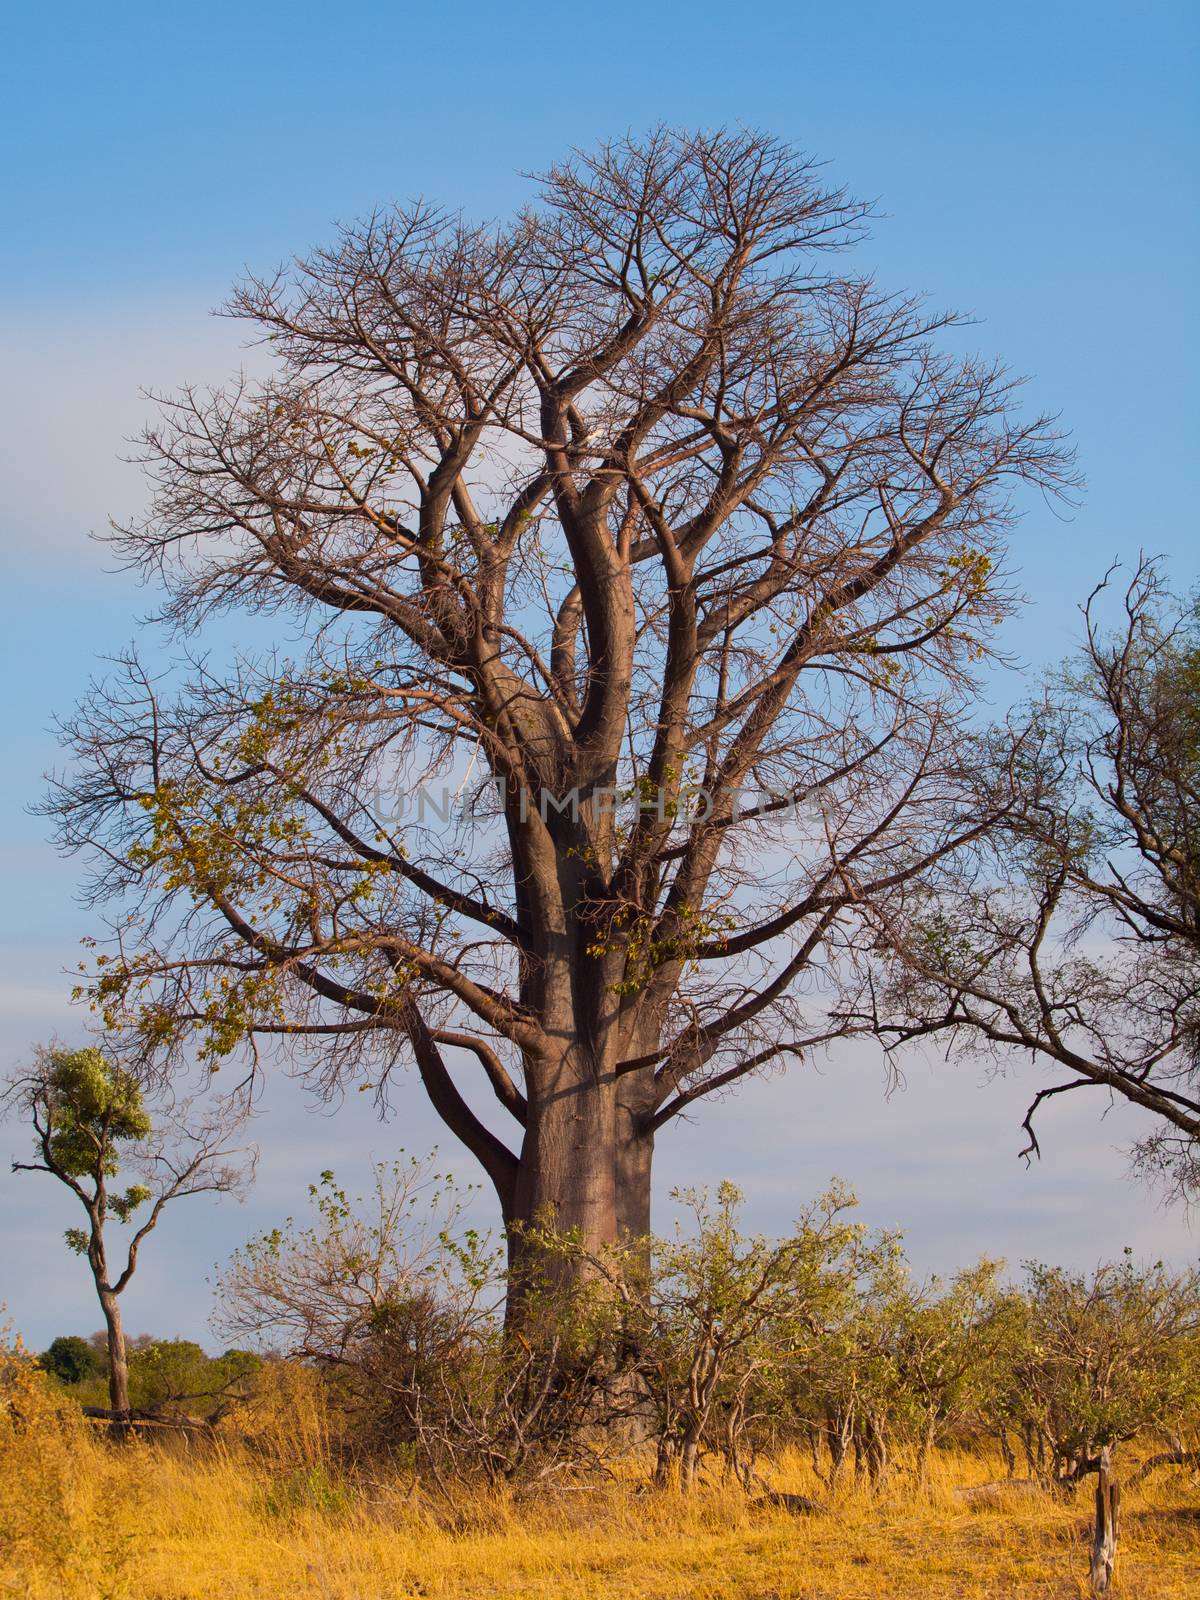 Lonesome baobab tree in savanna